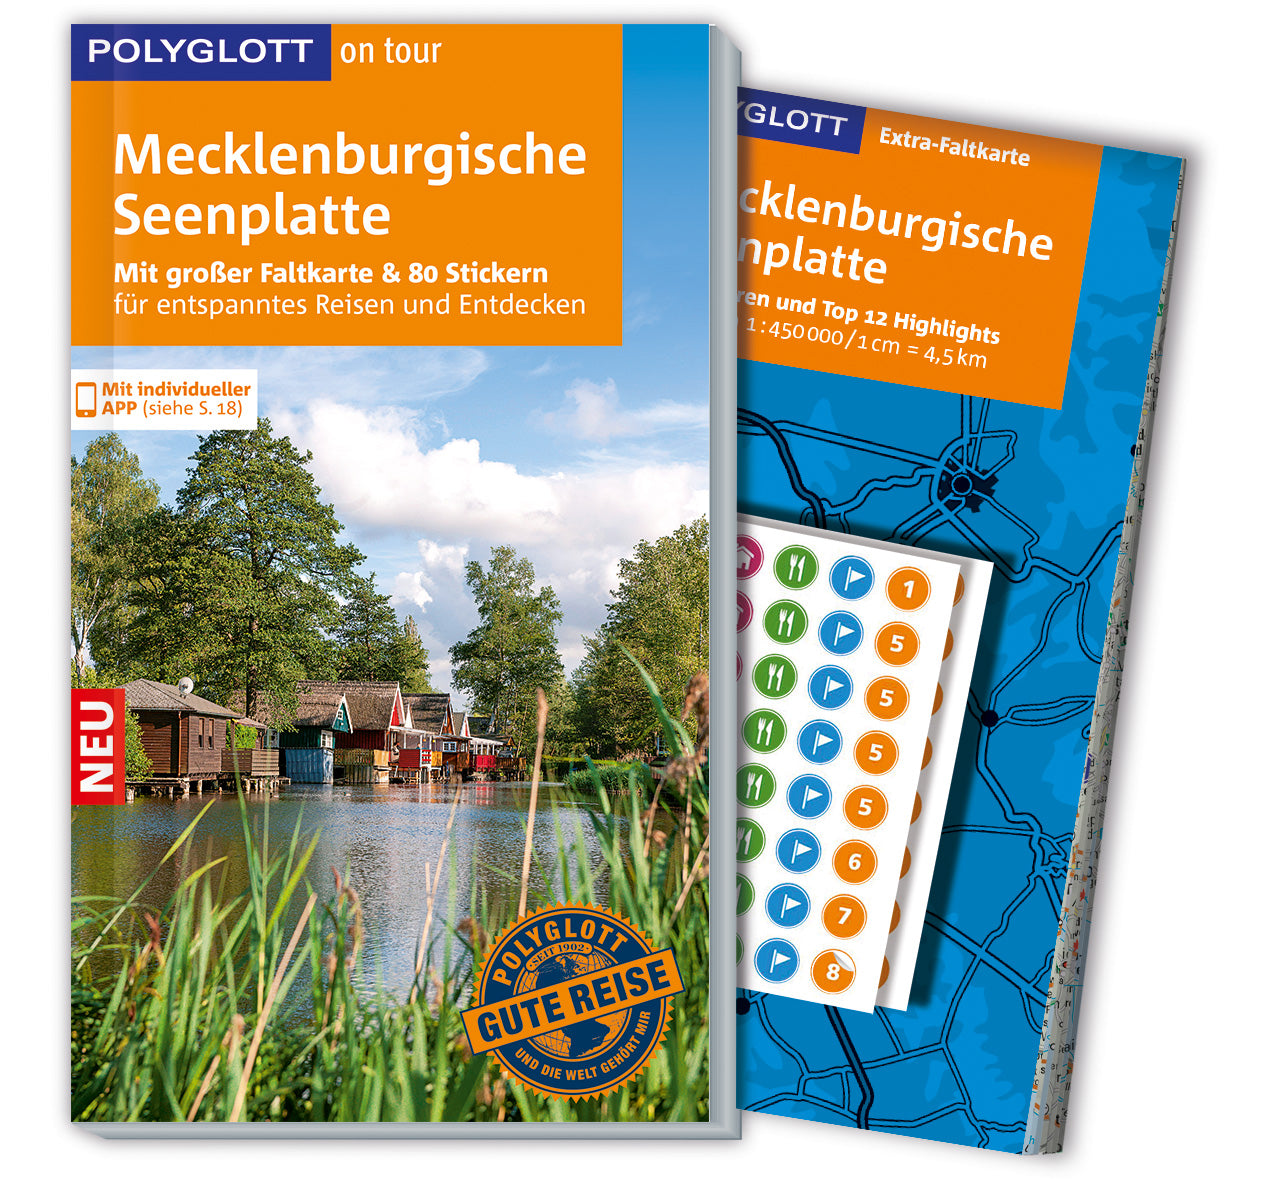 Travel guide Mecklenburgische Seenplatte - Polyglott on tour (2015)